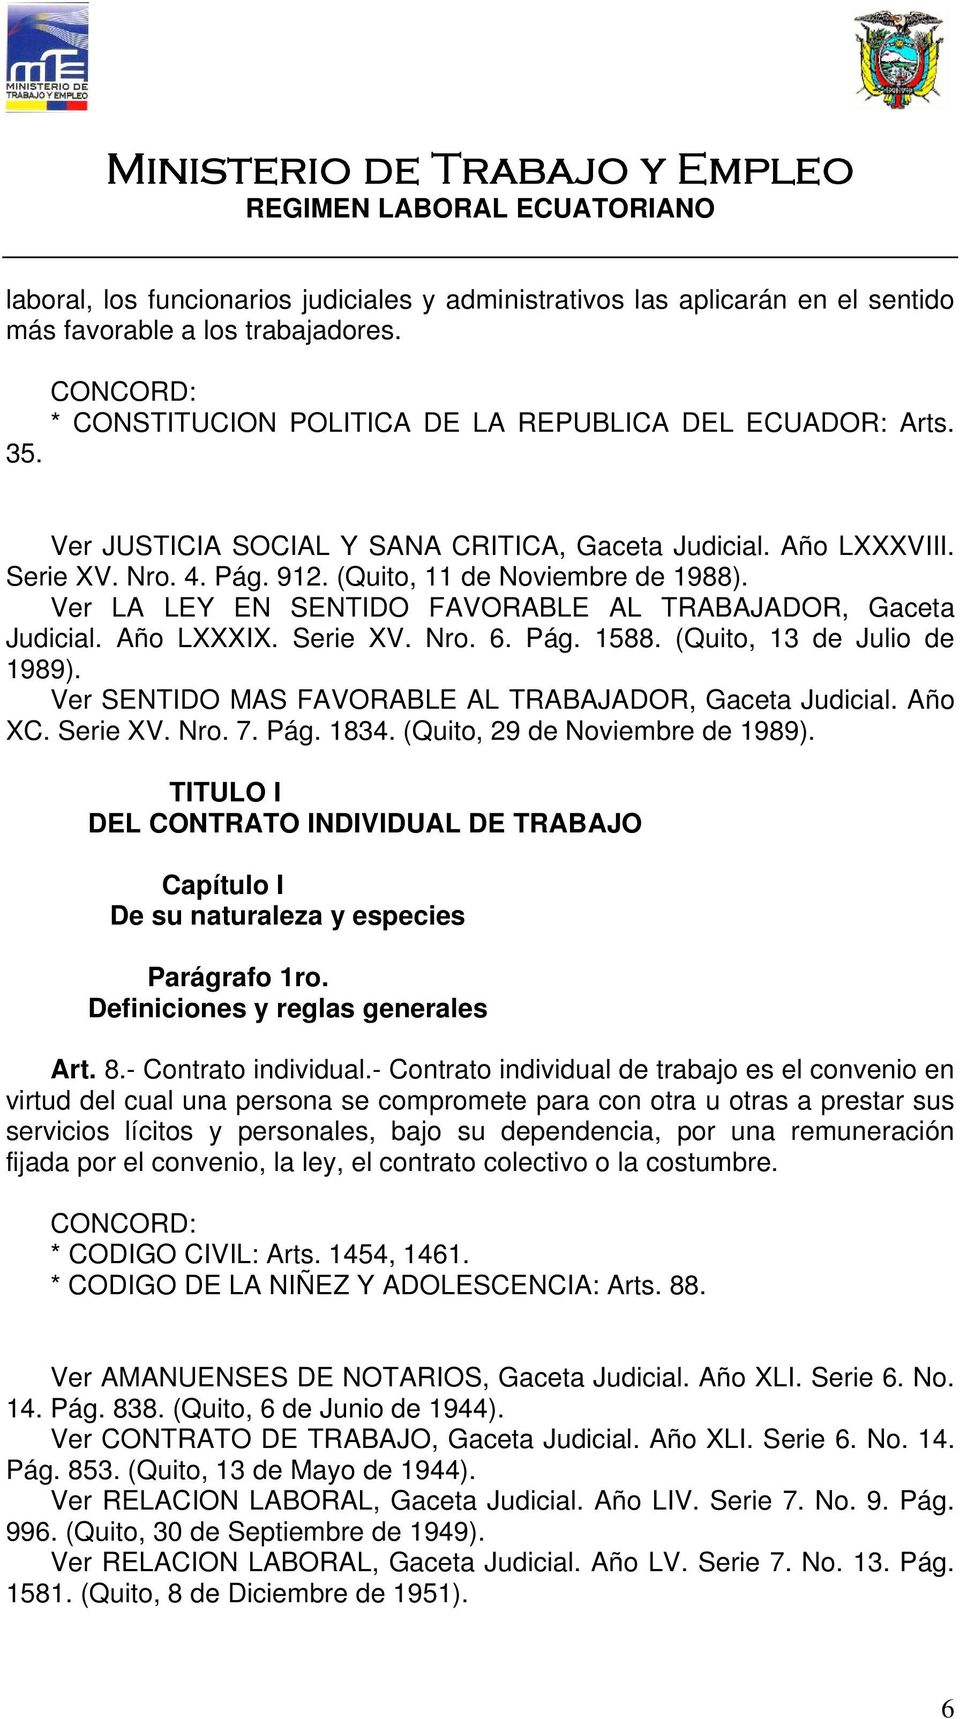 Año LXXXIX. Serie XV. Nro. 6. Pág. 1588. (Quito, 13 de Julio de 1989). Ver SENTIDO MAS FAVORABLE AL TRABAJADOR, Gaceta Judicial. Año XC. Serie XV. Nro. 7. Pág. 1834. (Quito, 29 de Noviembre de 1989).